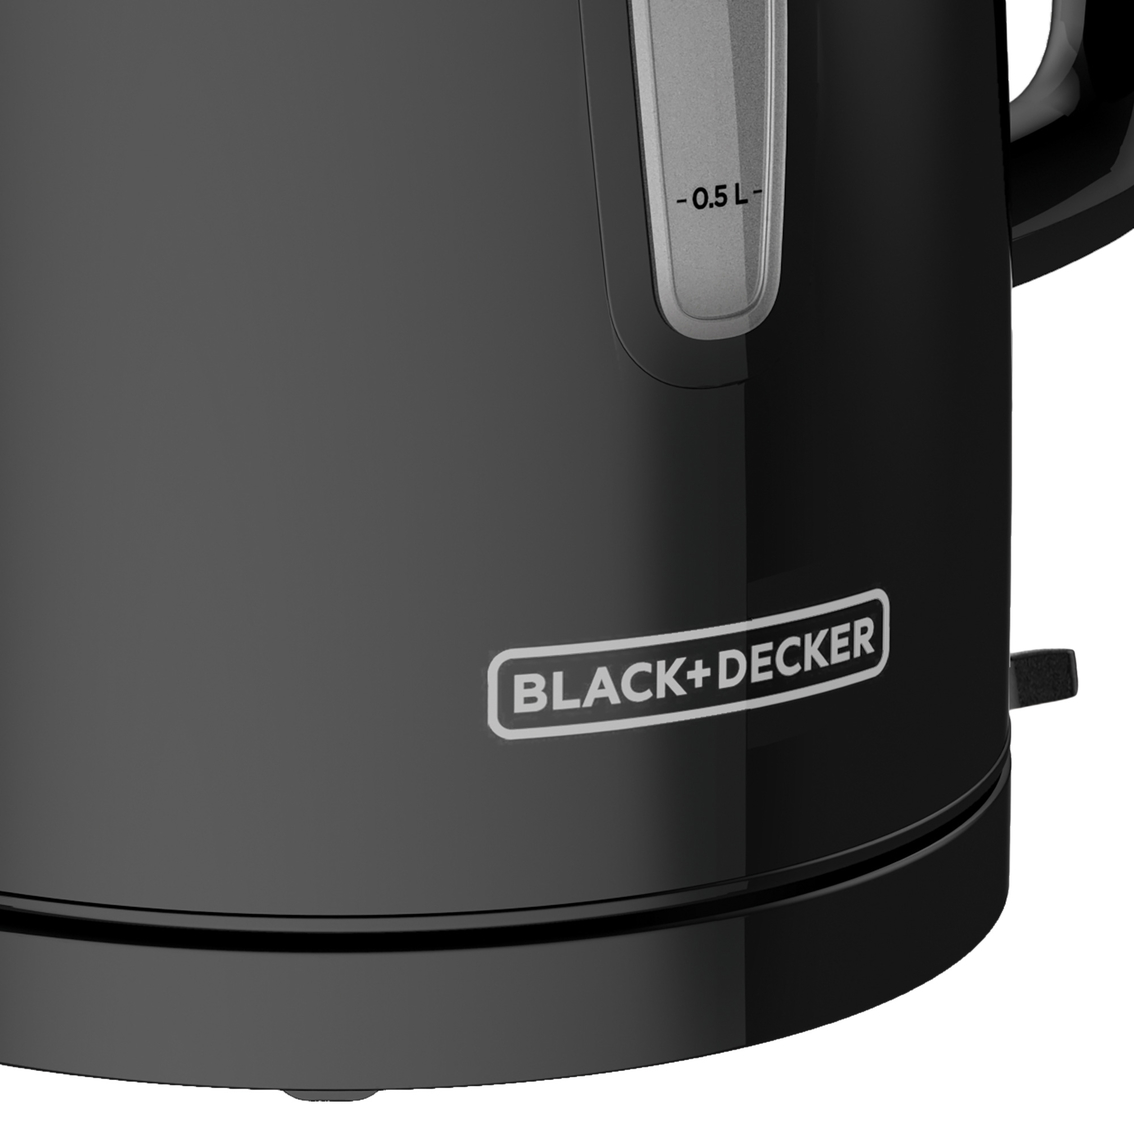 Black+decker 1.7 L Gray Electric Kettle